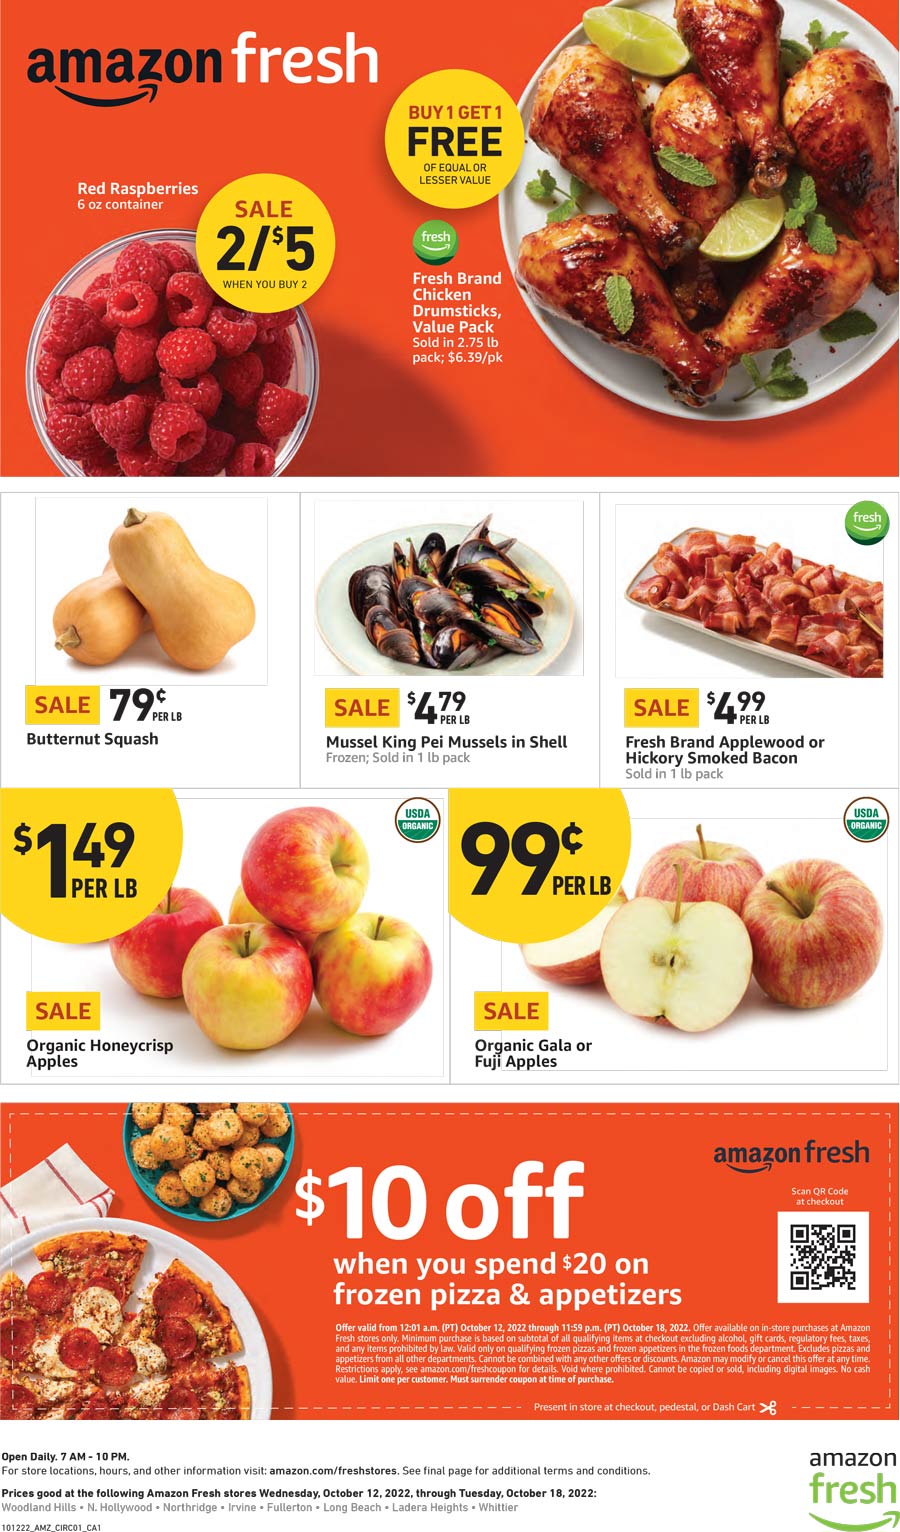 Amazon Fresh restaurants Coupon  $10 off $20 on pizza & appetizers at Amazon Fresh grocery #amazonfresh 